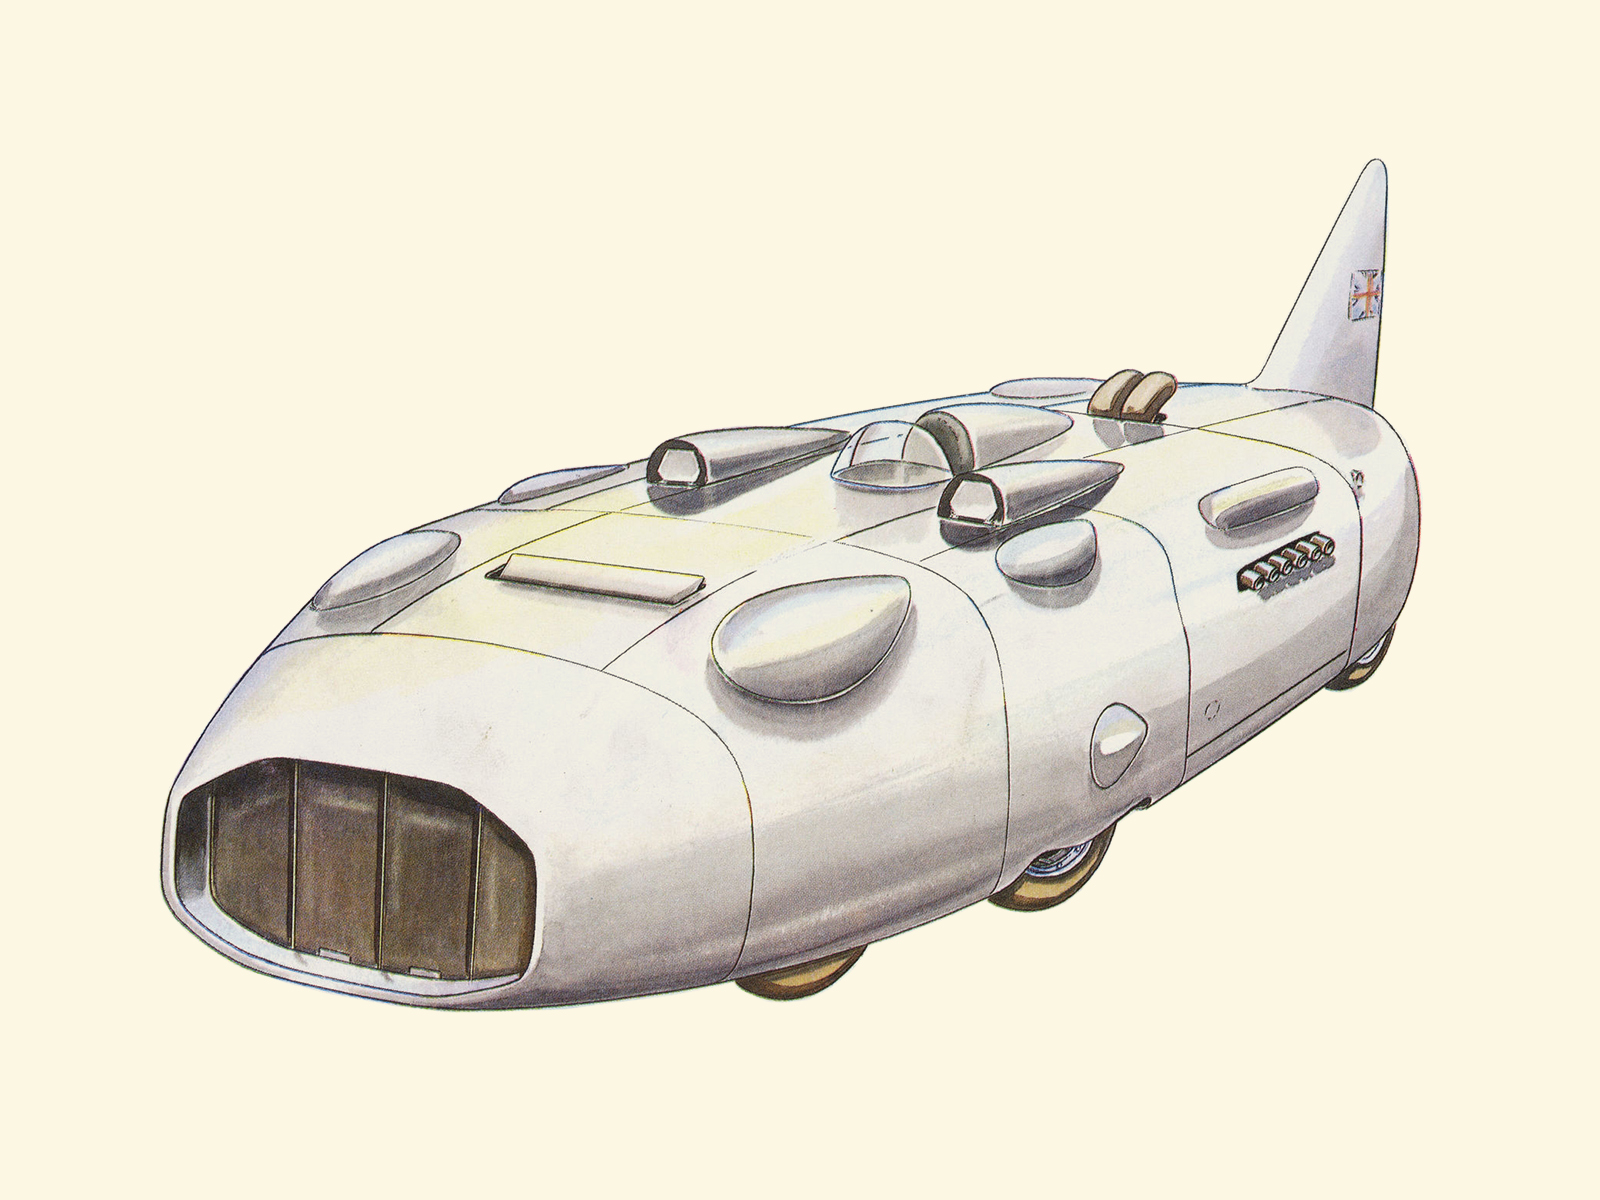 1937/38 Thunderbolt (G.E.T. Eyston 312.00/345.50/357.50 mph): Illustrated by Piet Olyslager